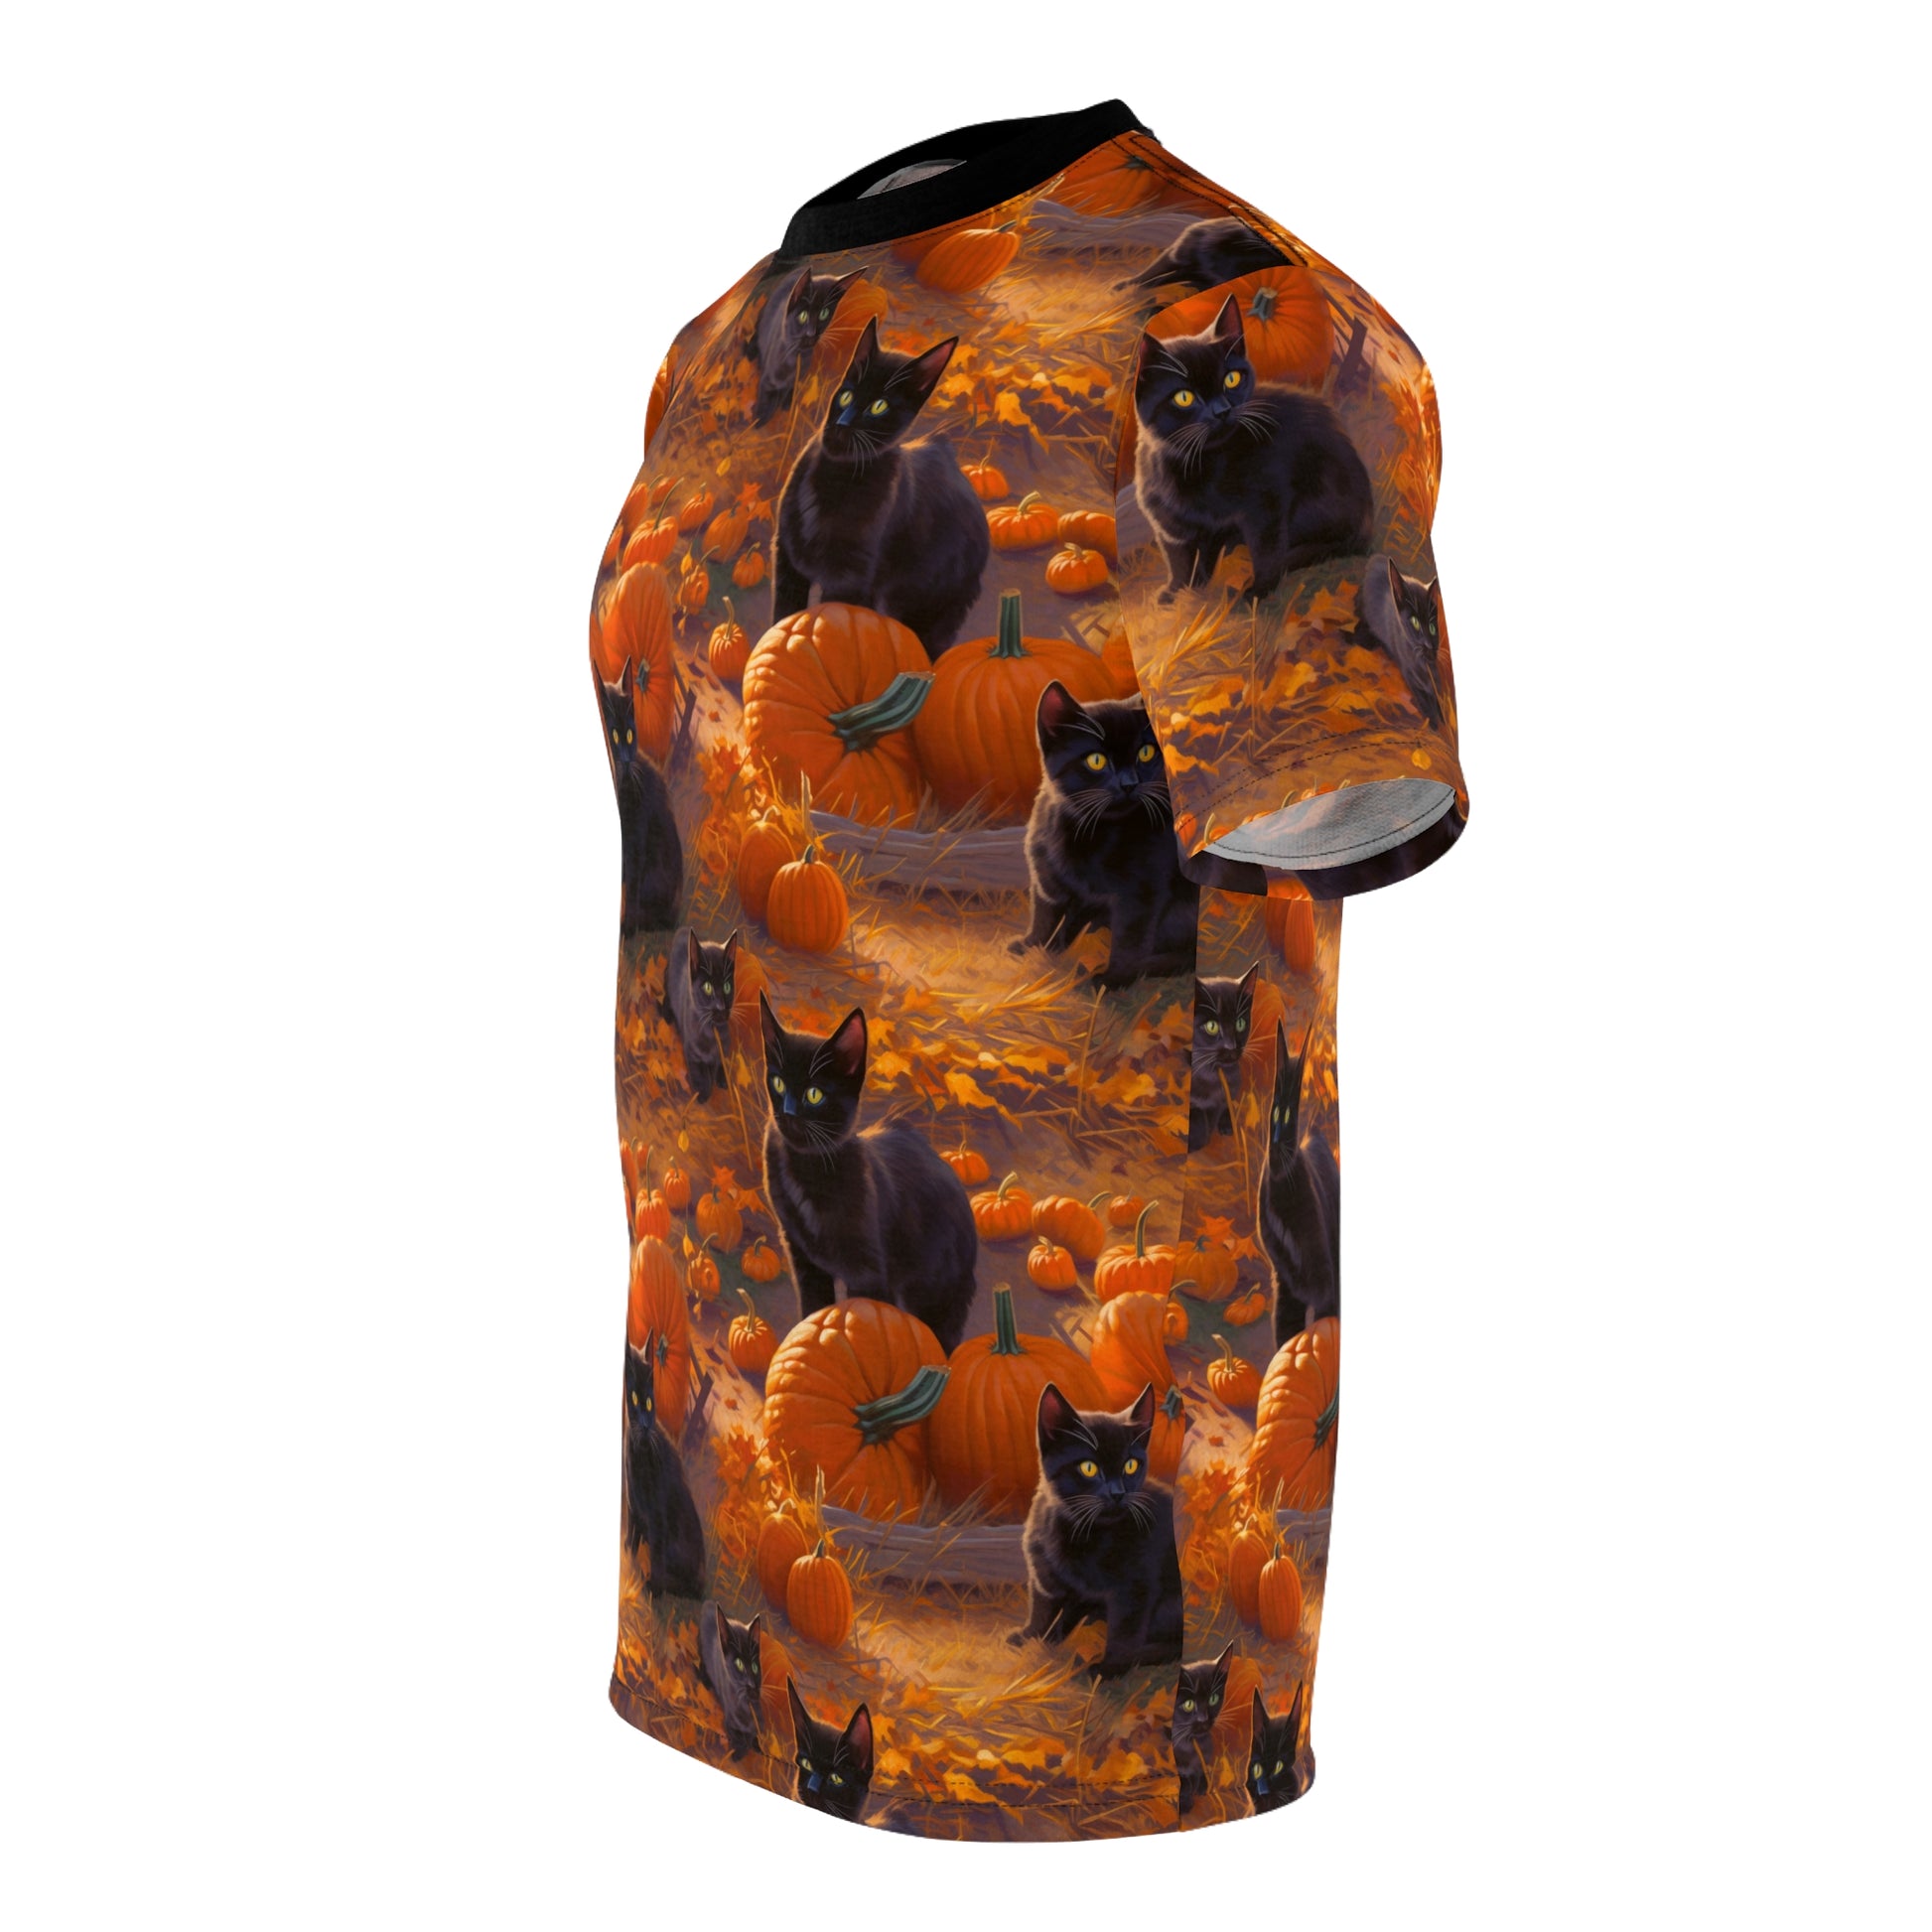 Black Cats in the Pumpkin Patch T-Shirt by Studio Ten Design